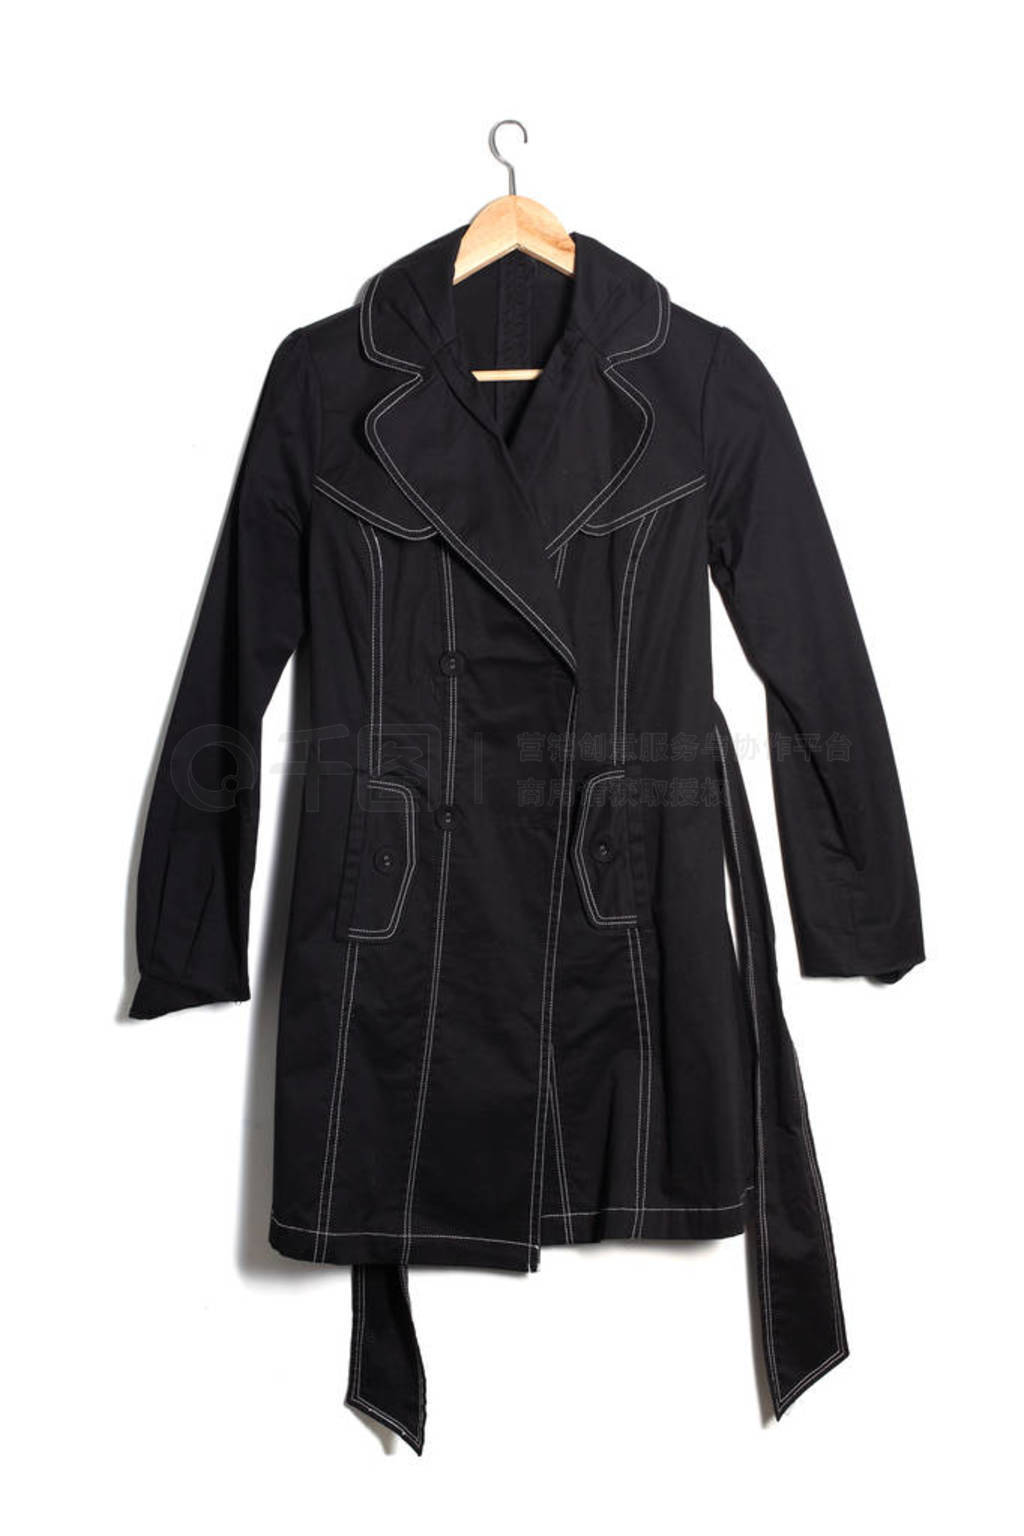 Long Sleeve Black Coat